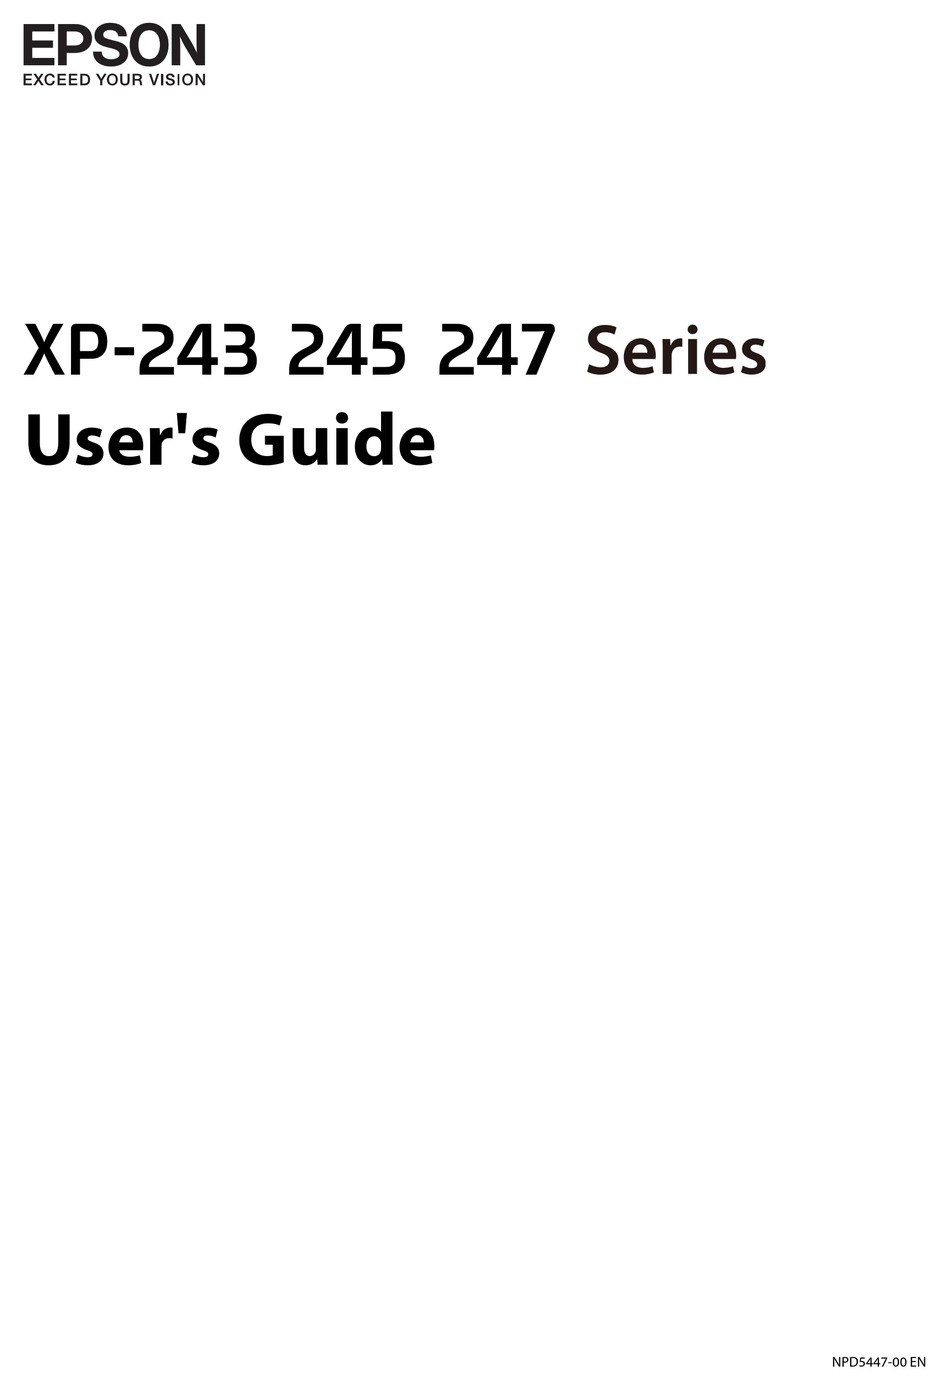 Epson Xp 243 Series Xp 245 Series User Manual Pdf Download Manualslib